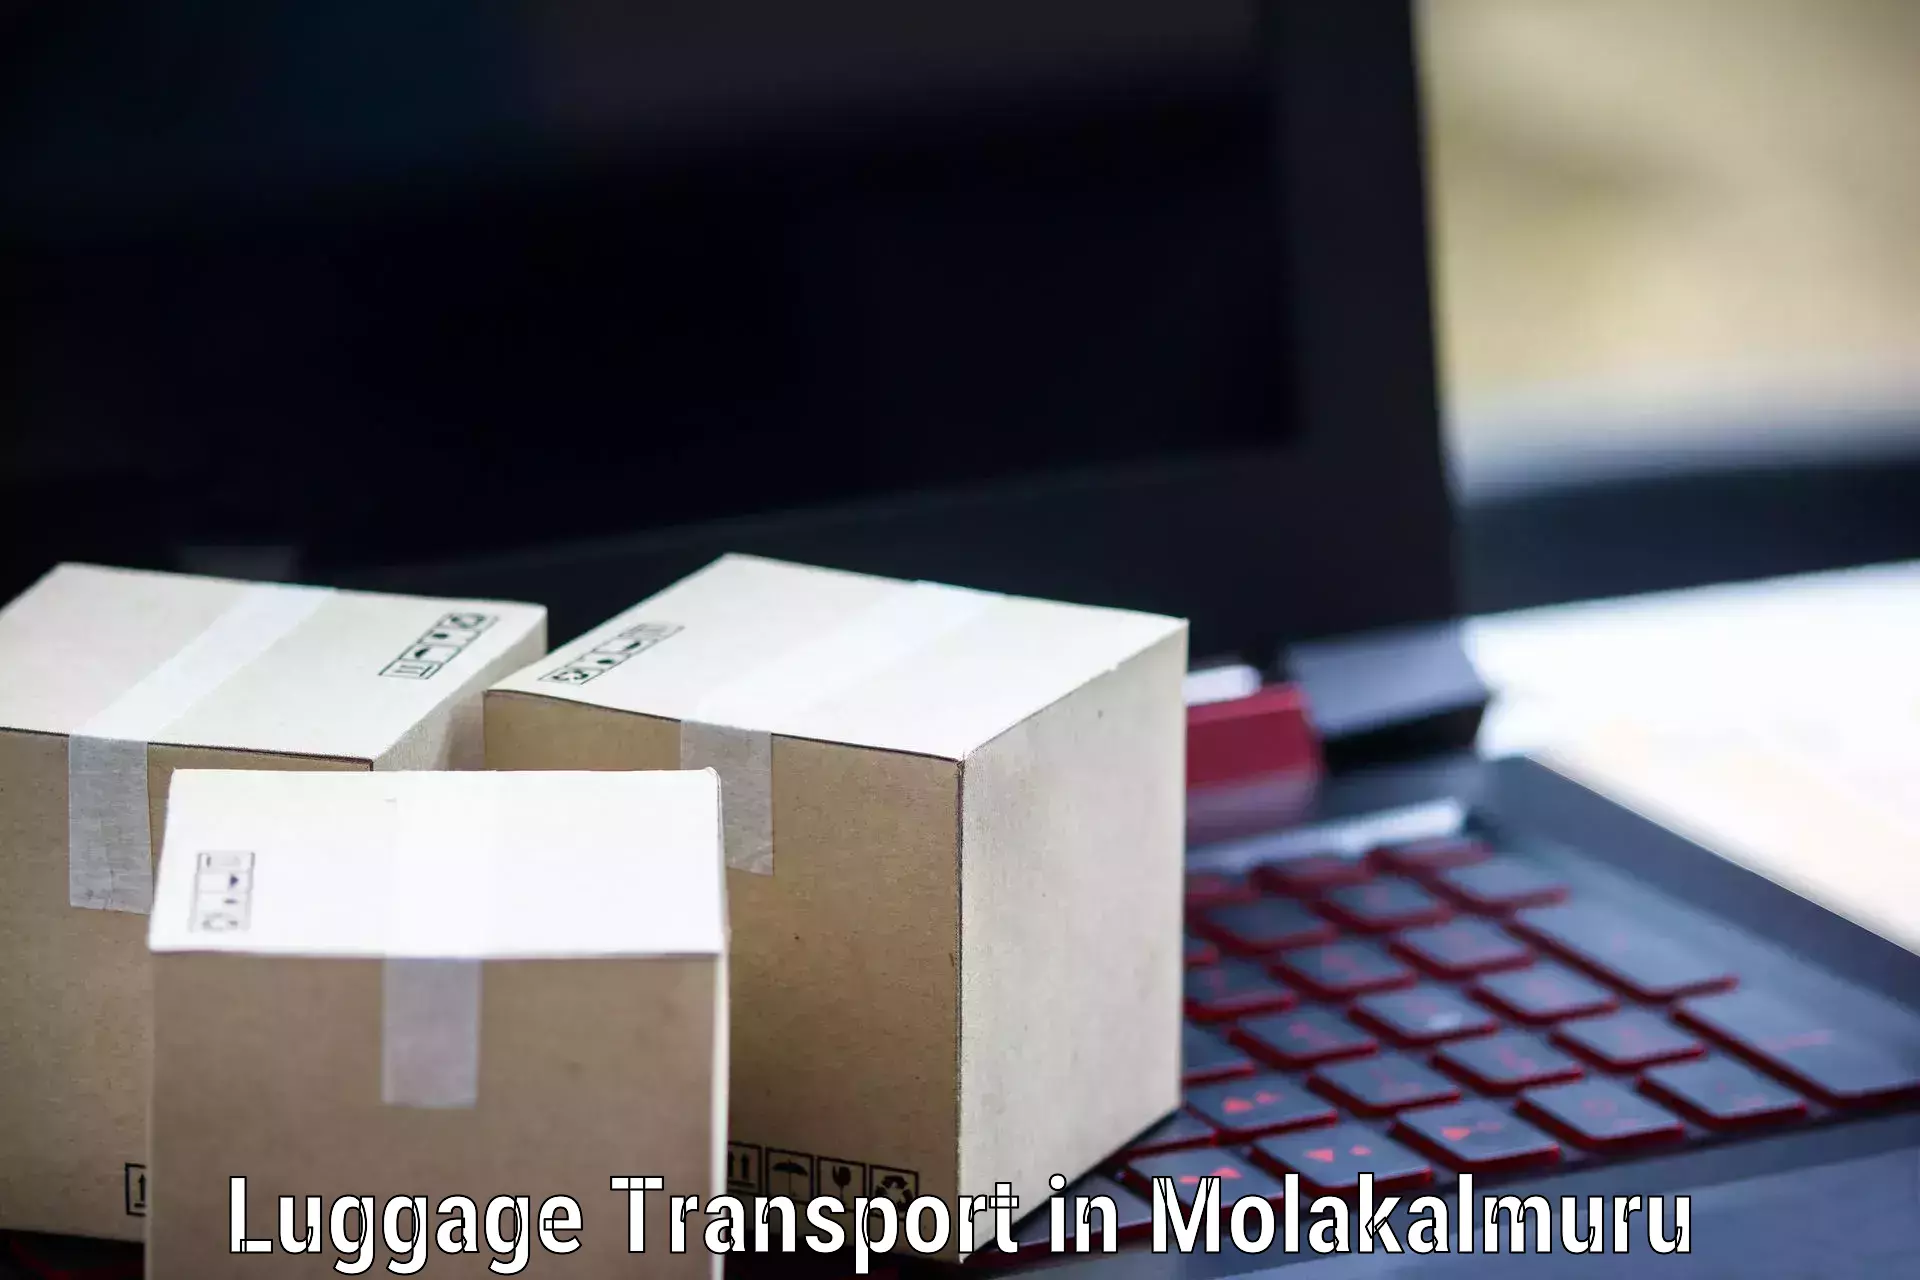 Luggage transport schedule in Molakalmuru